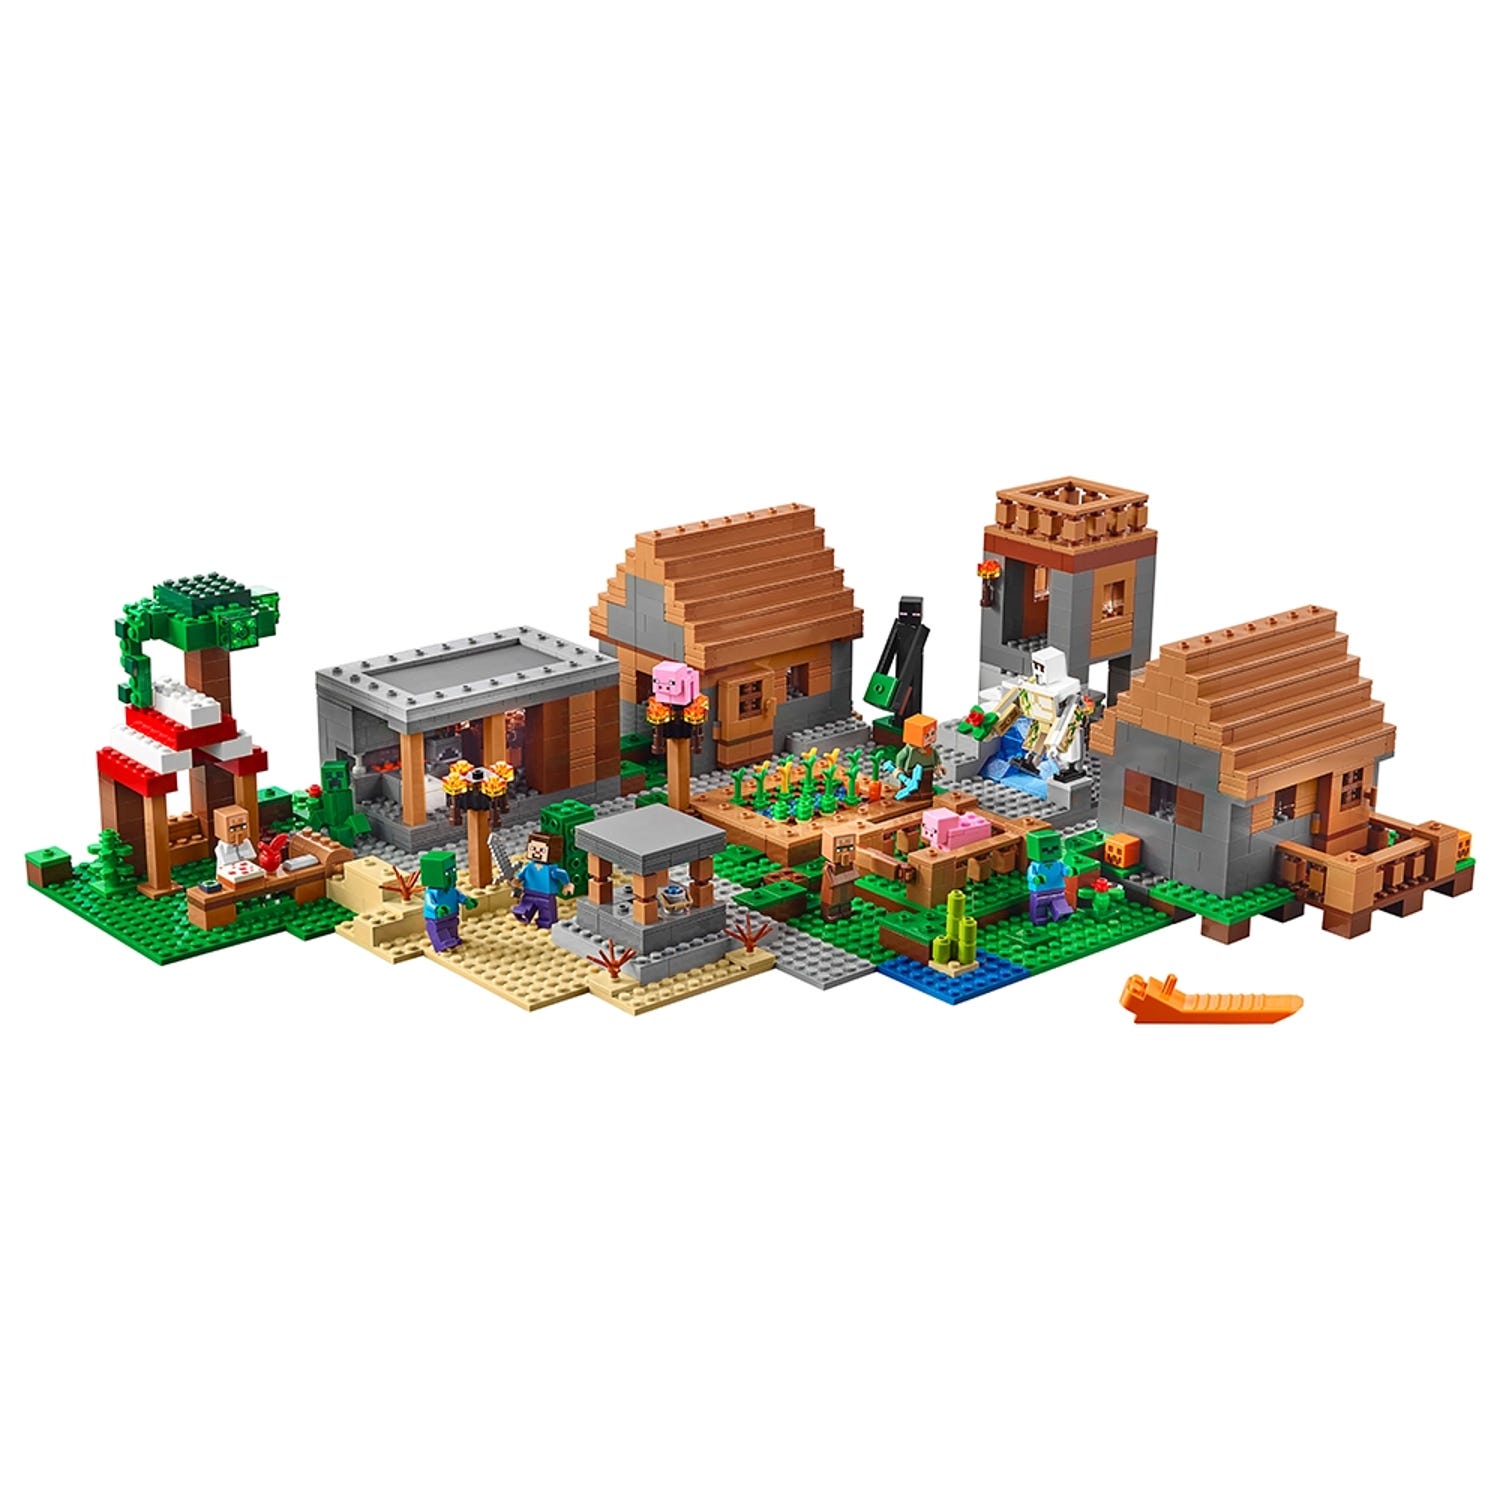 Lego Minecraft | vlr.eng.br